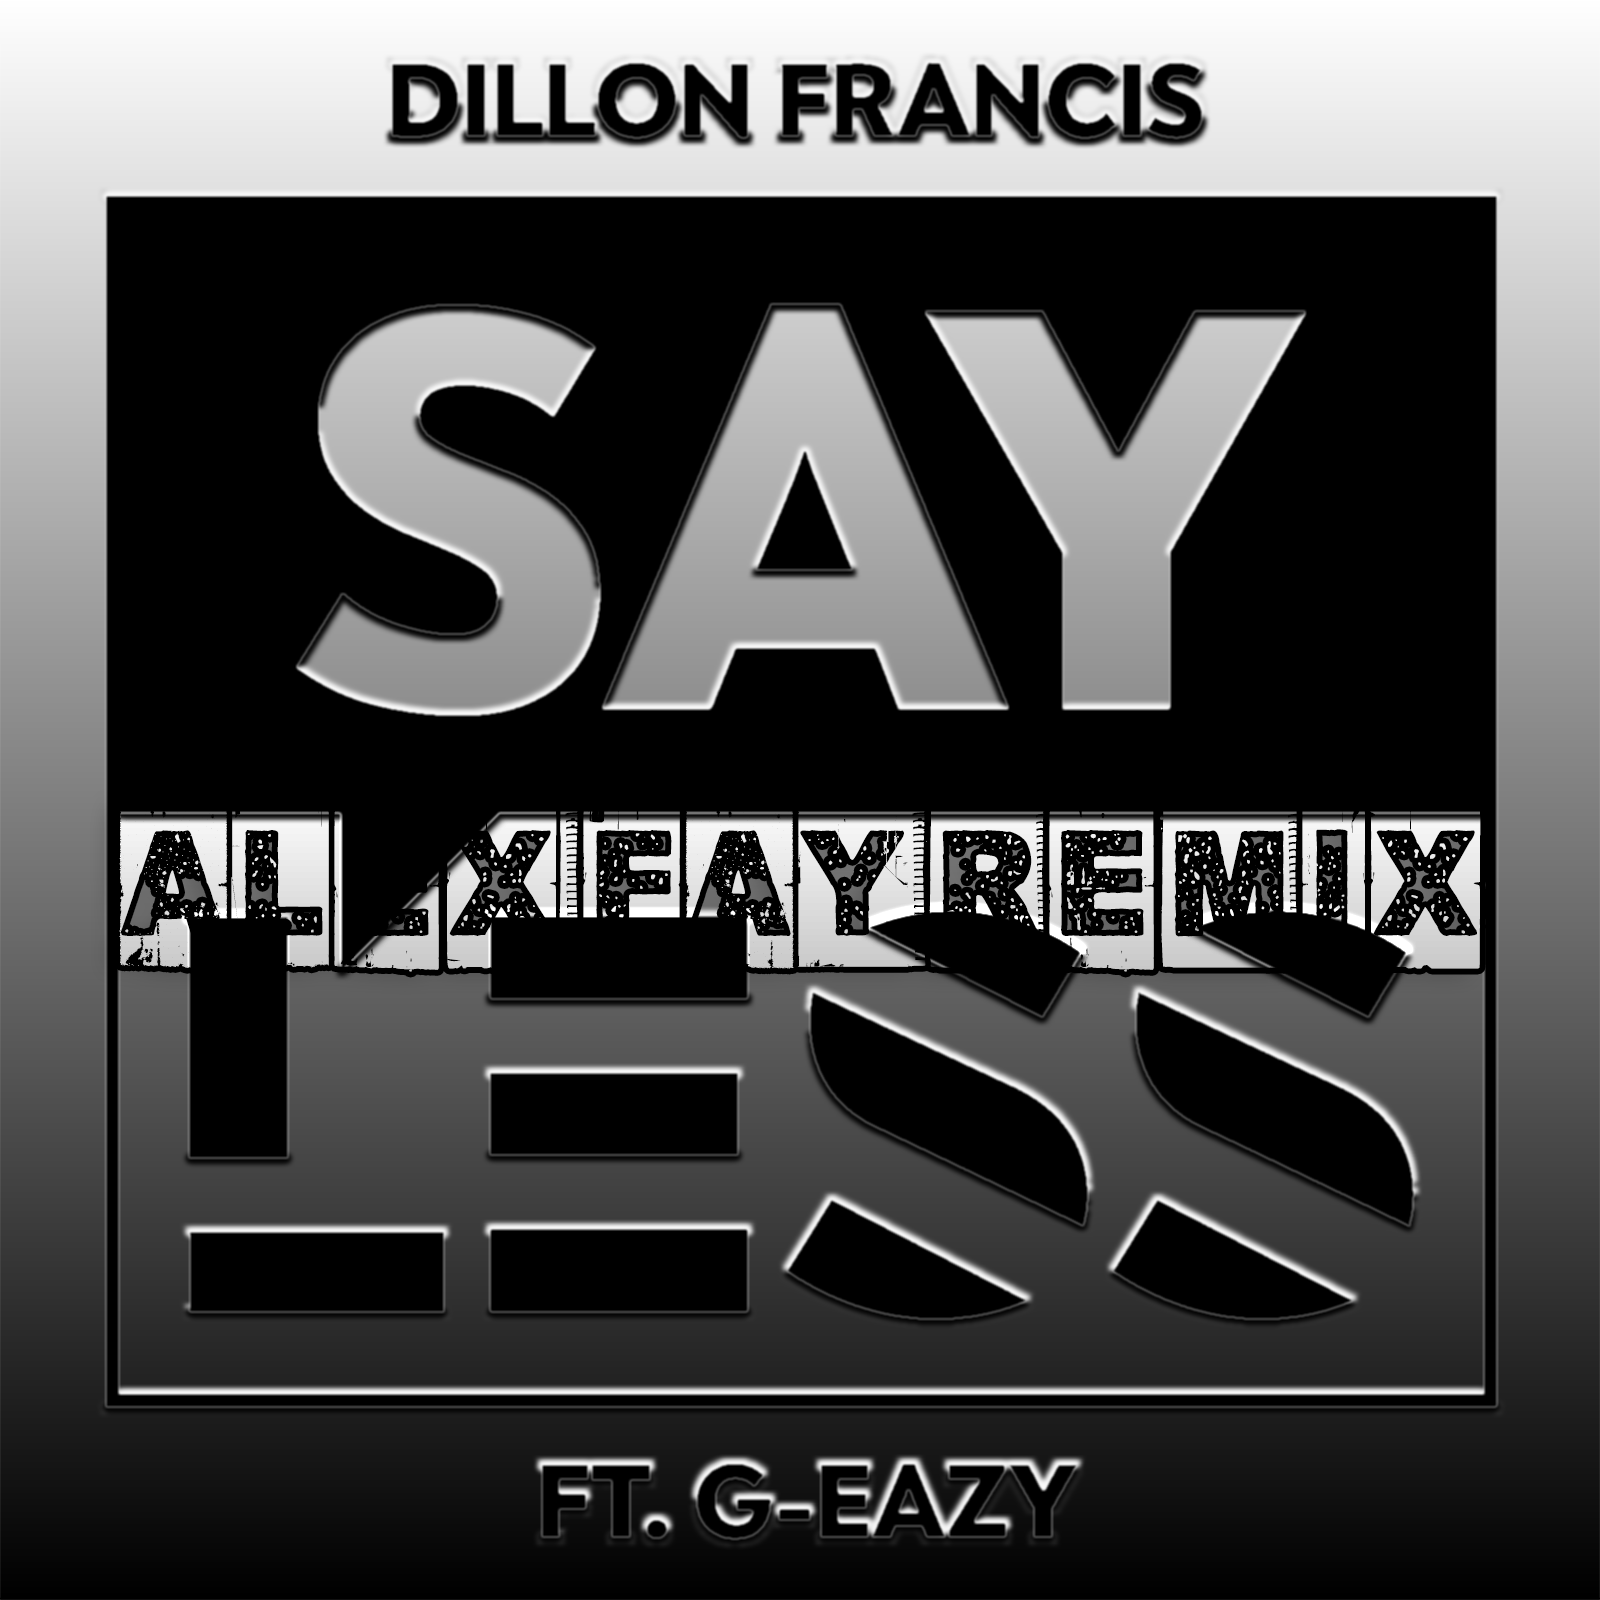 Dillon Francis & G-Eazy - Say Less (Alex Fay Remix)